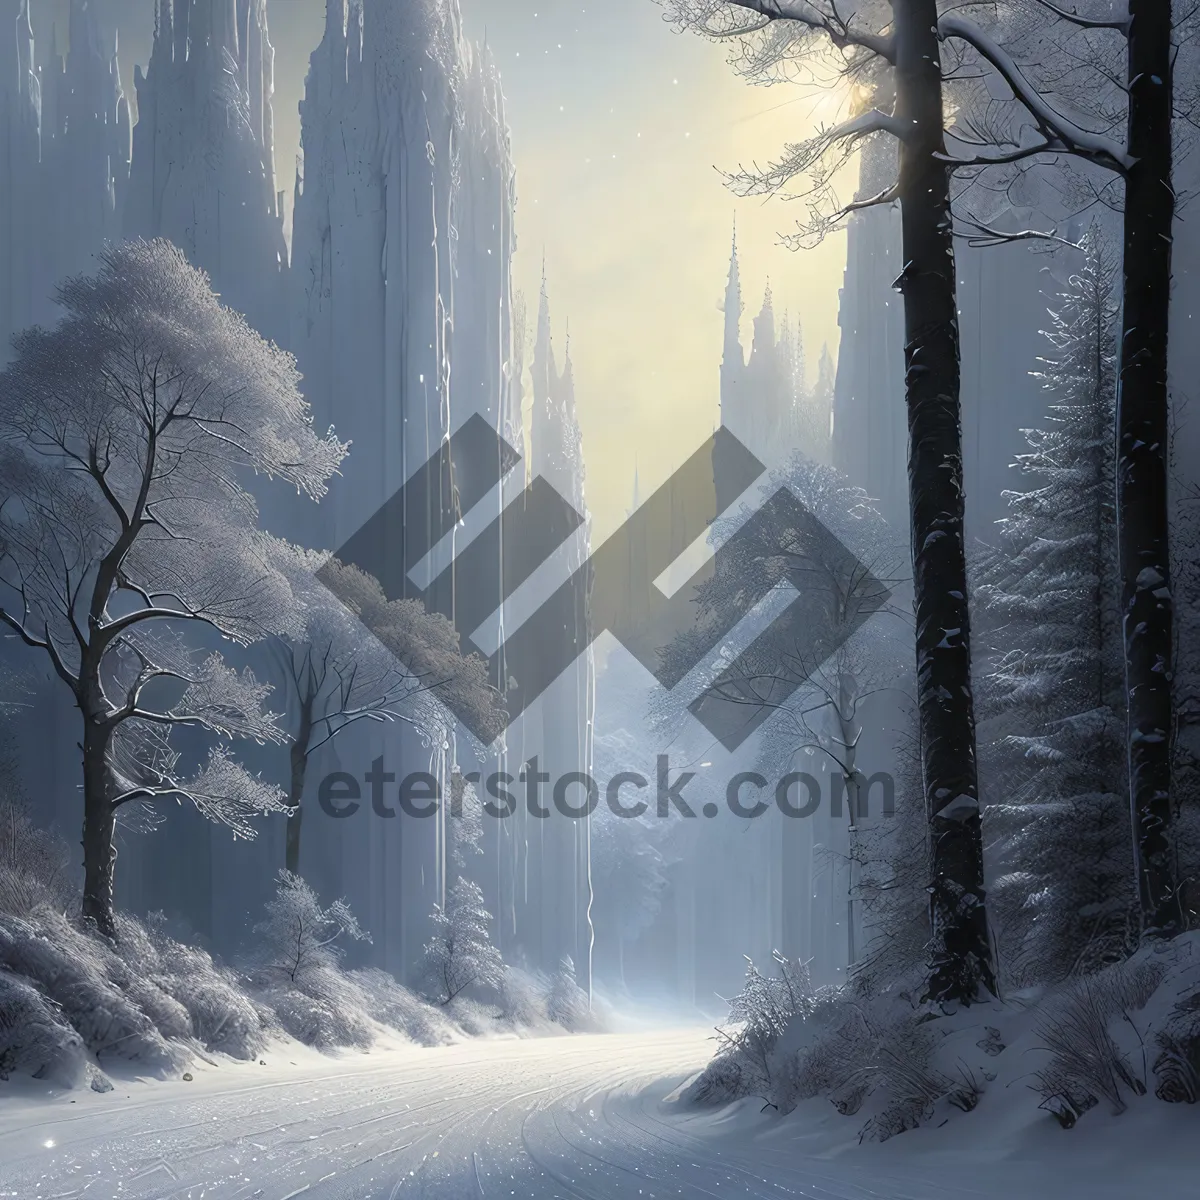 Picture of Winter Wonderland: Serene Snowy Forest Landscape